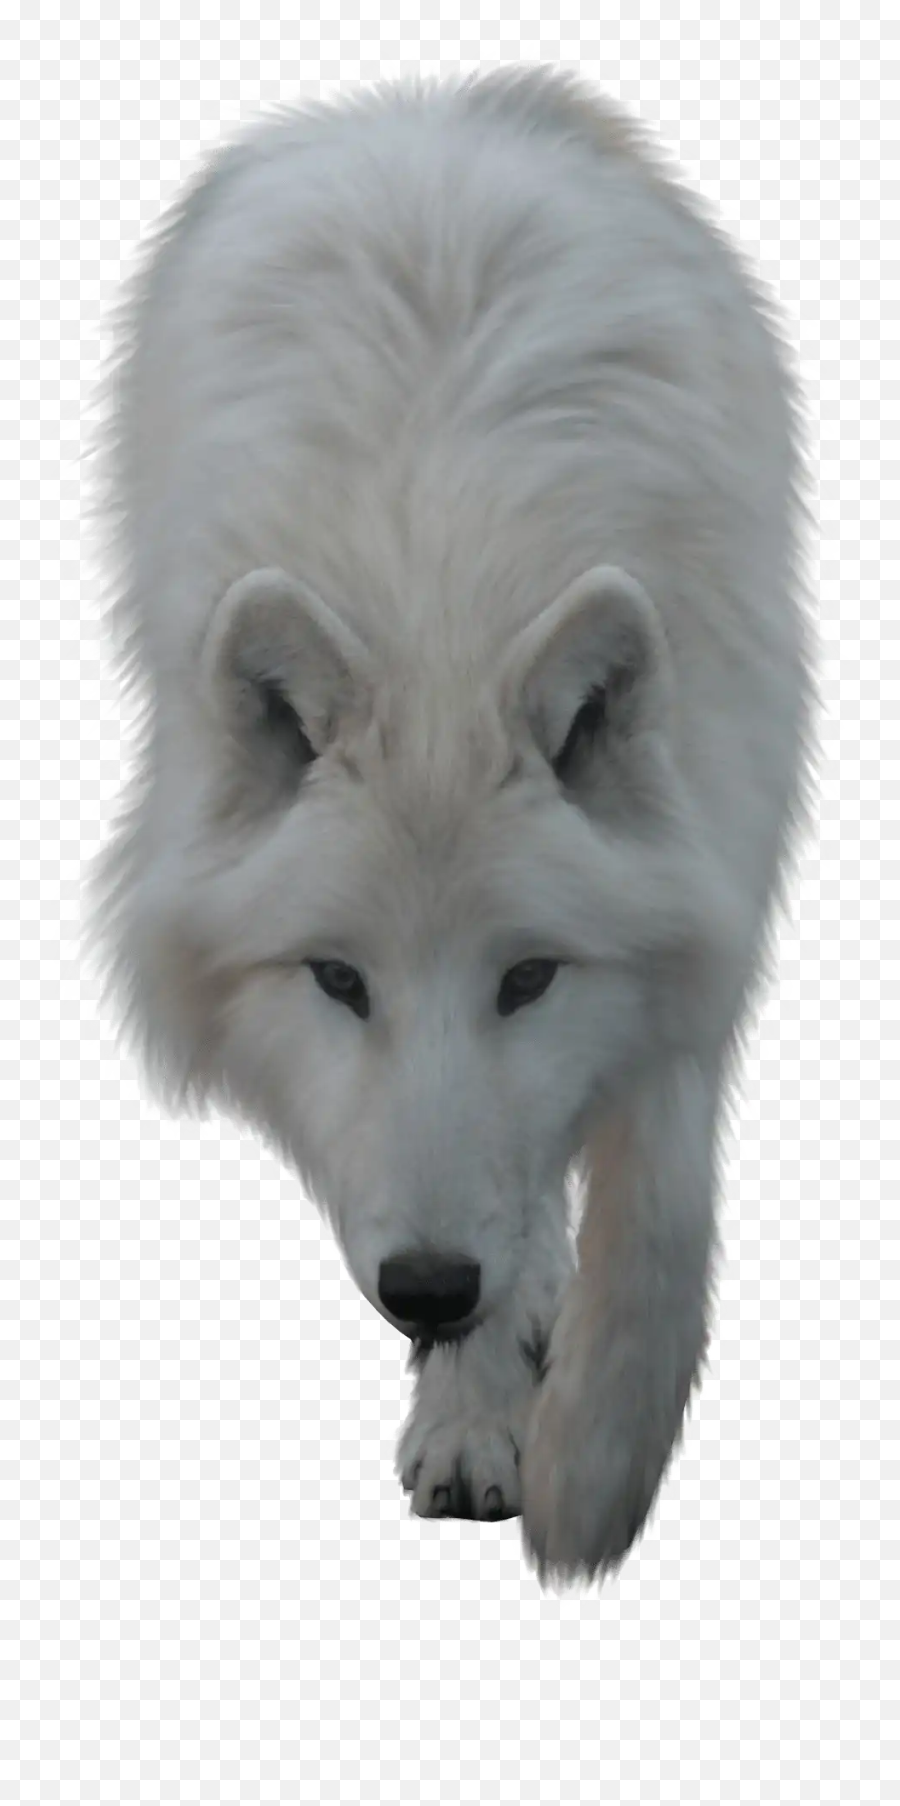 The Most Edited Wolfart Picsart - White Wolf Png Hd Emoji,Arctic Fox Laughing Emoji